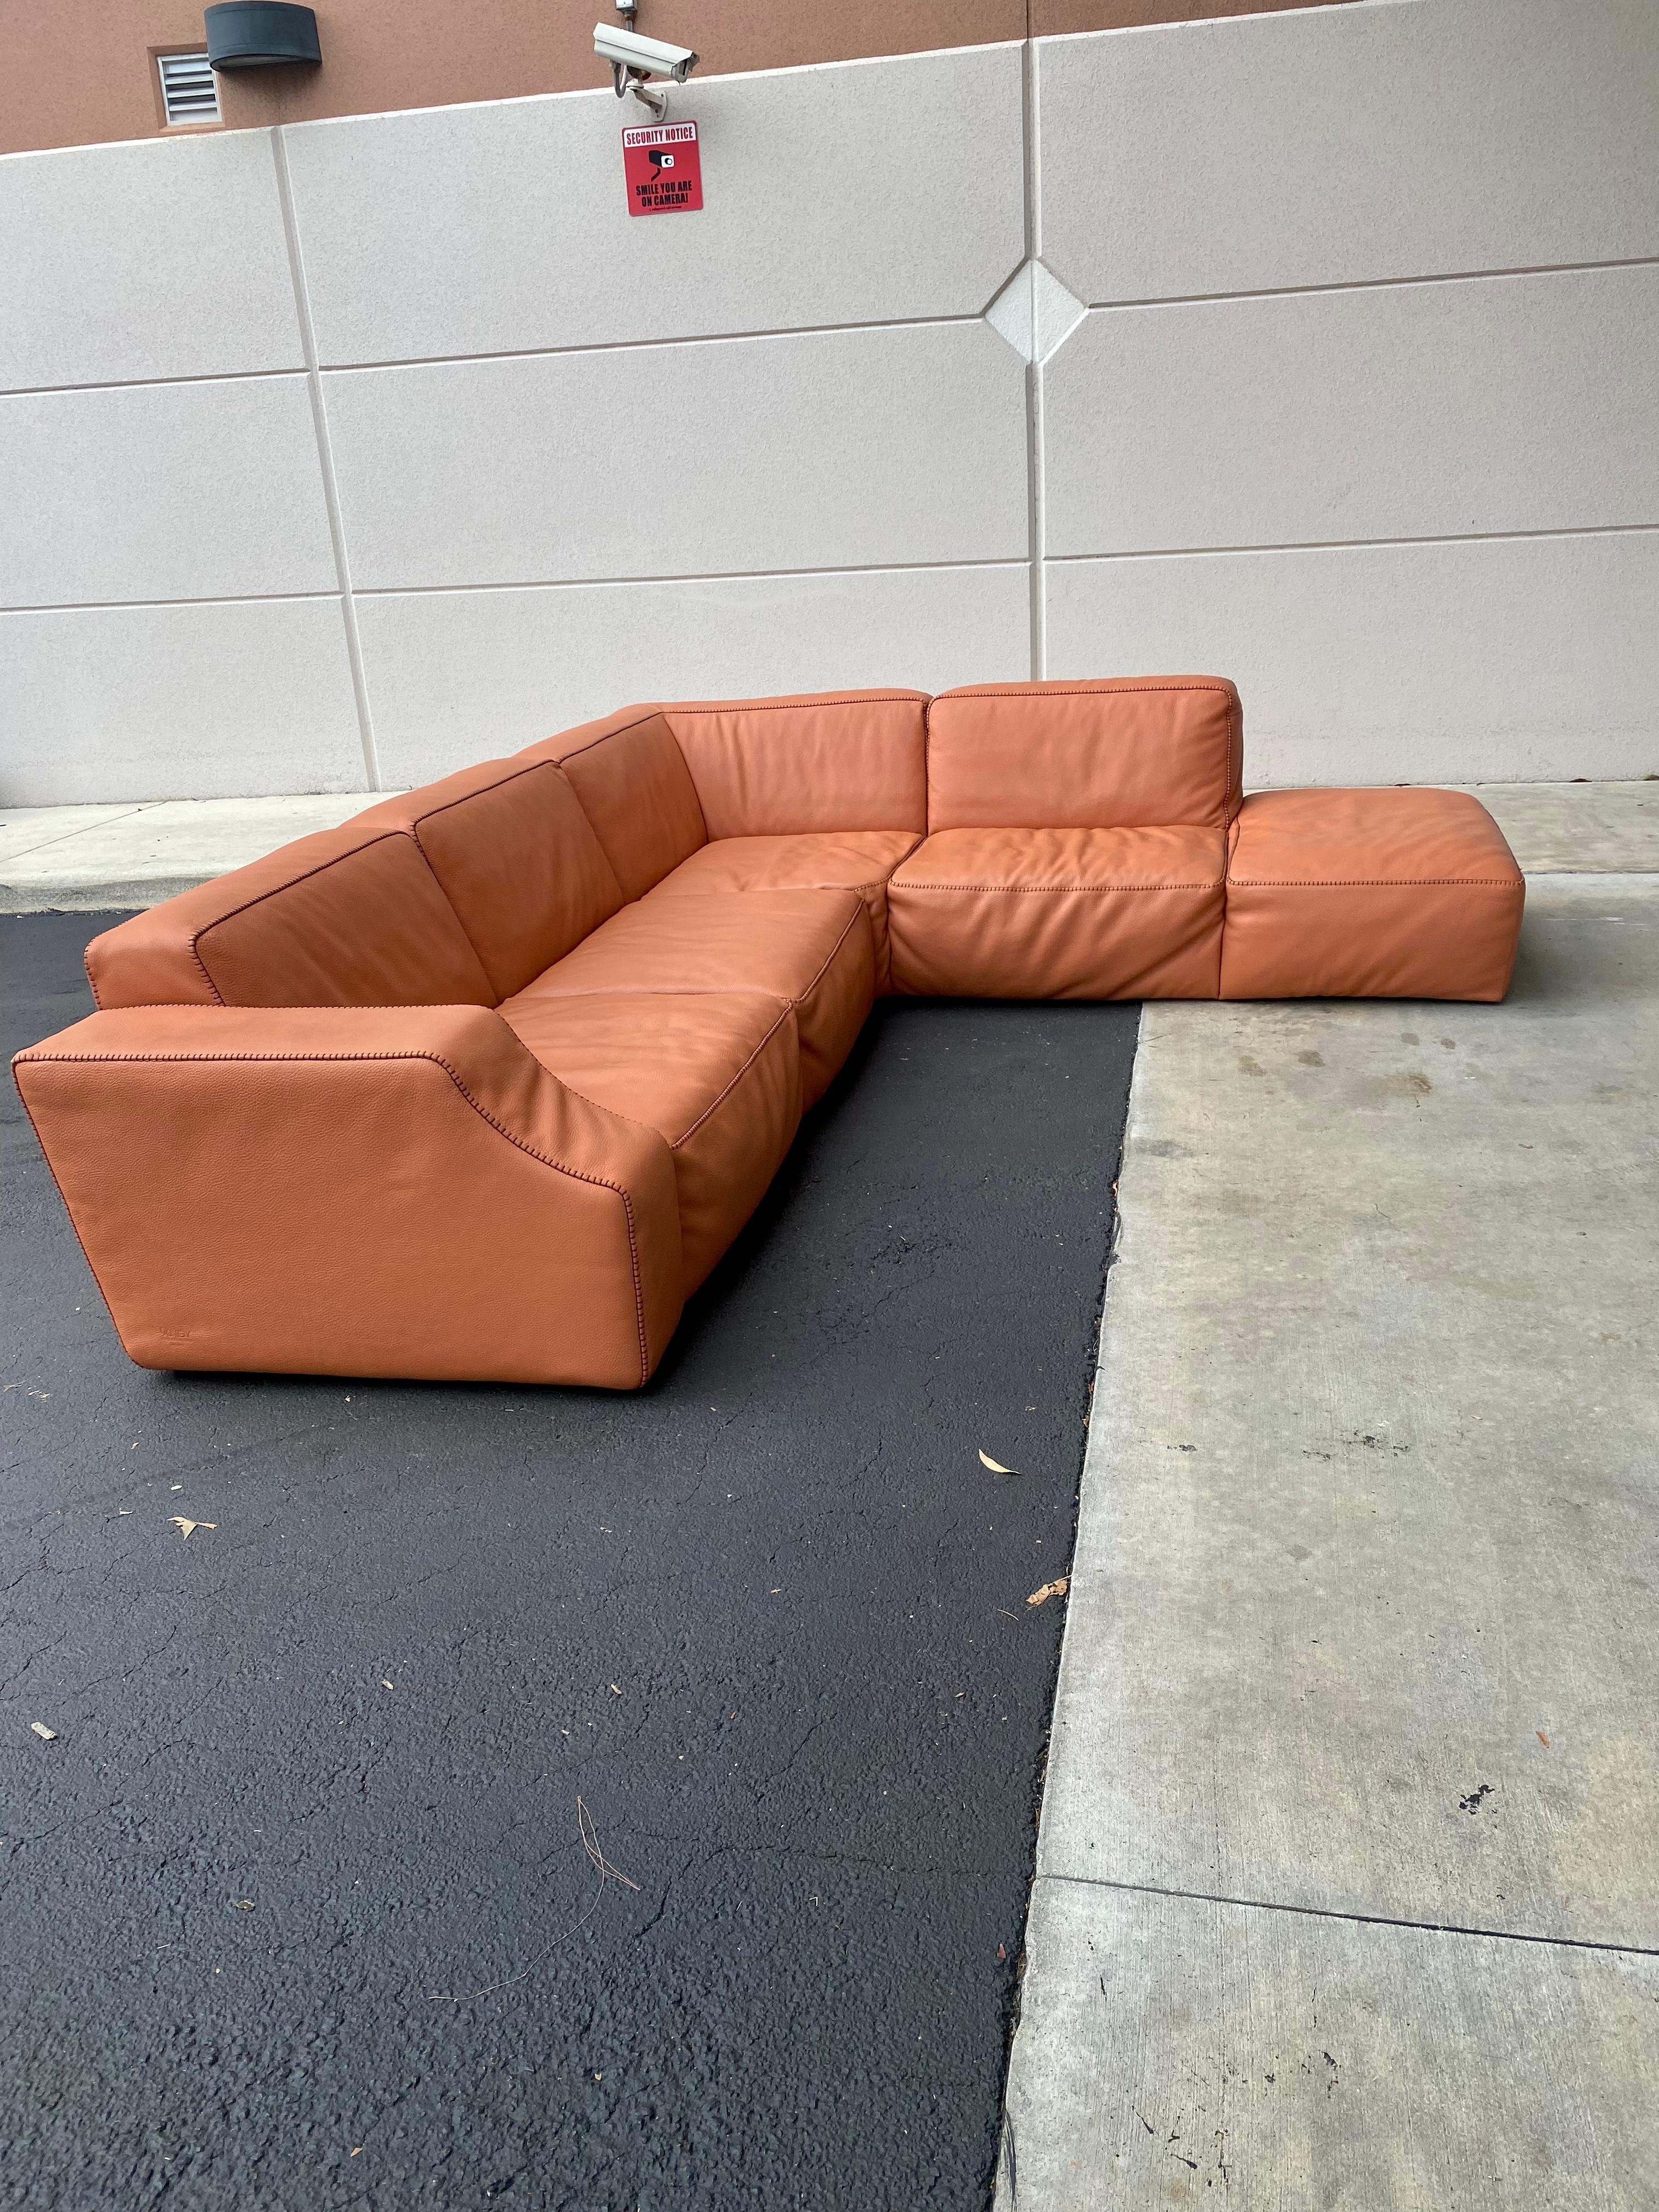 orange cloud couch